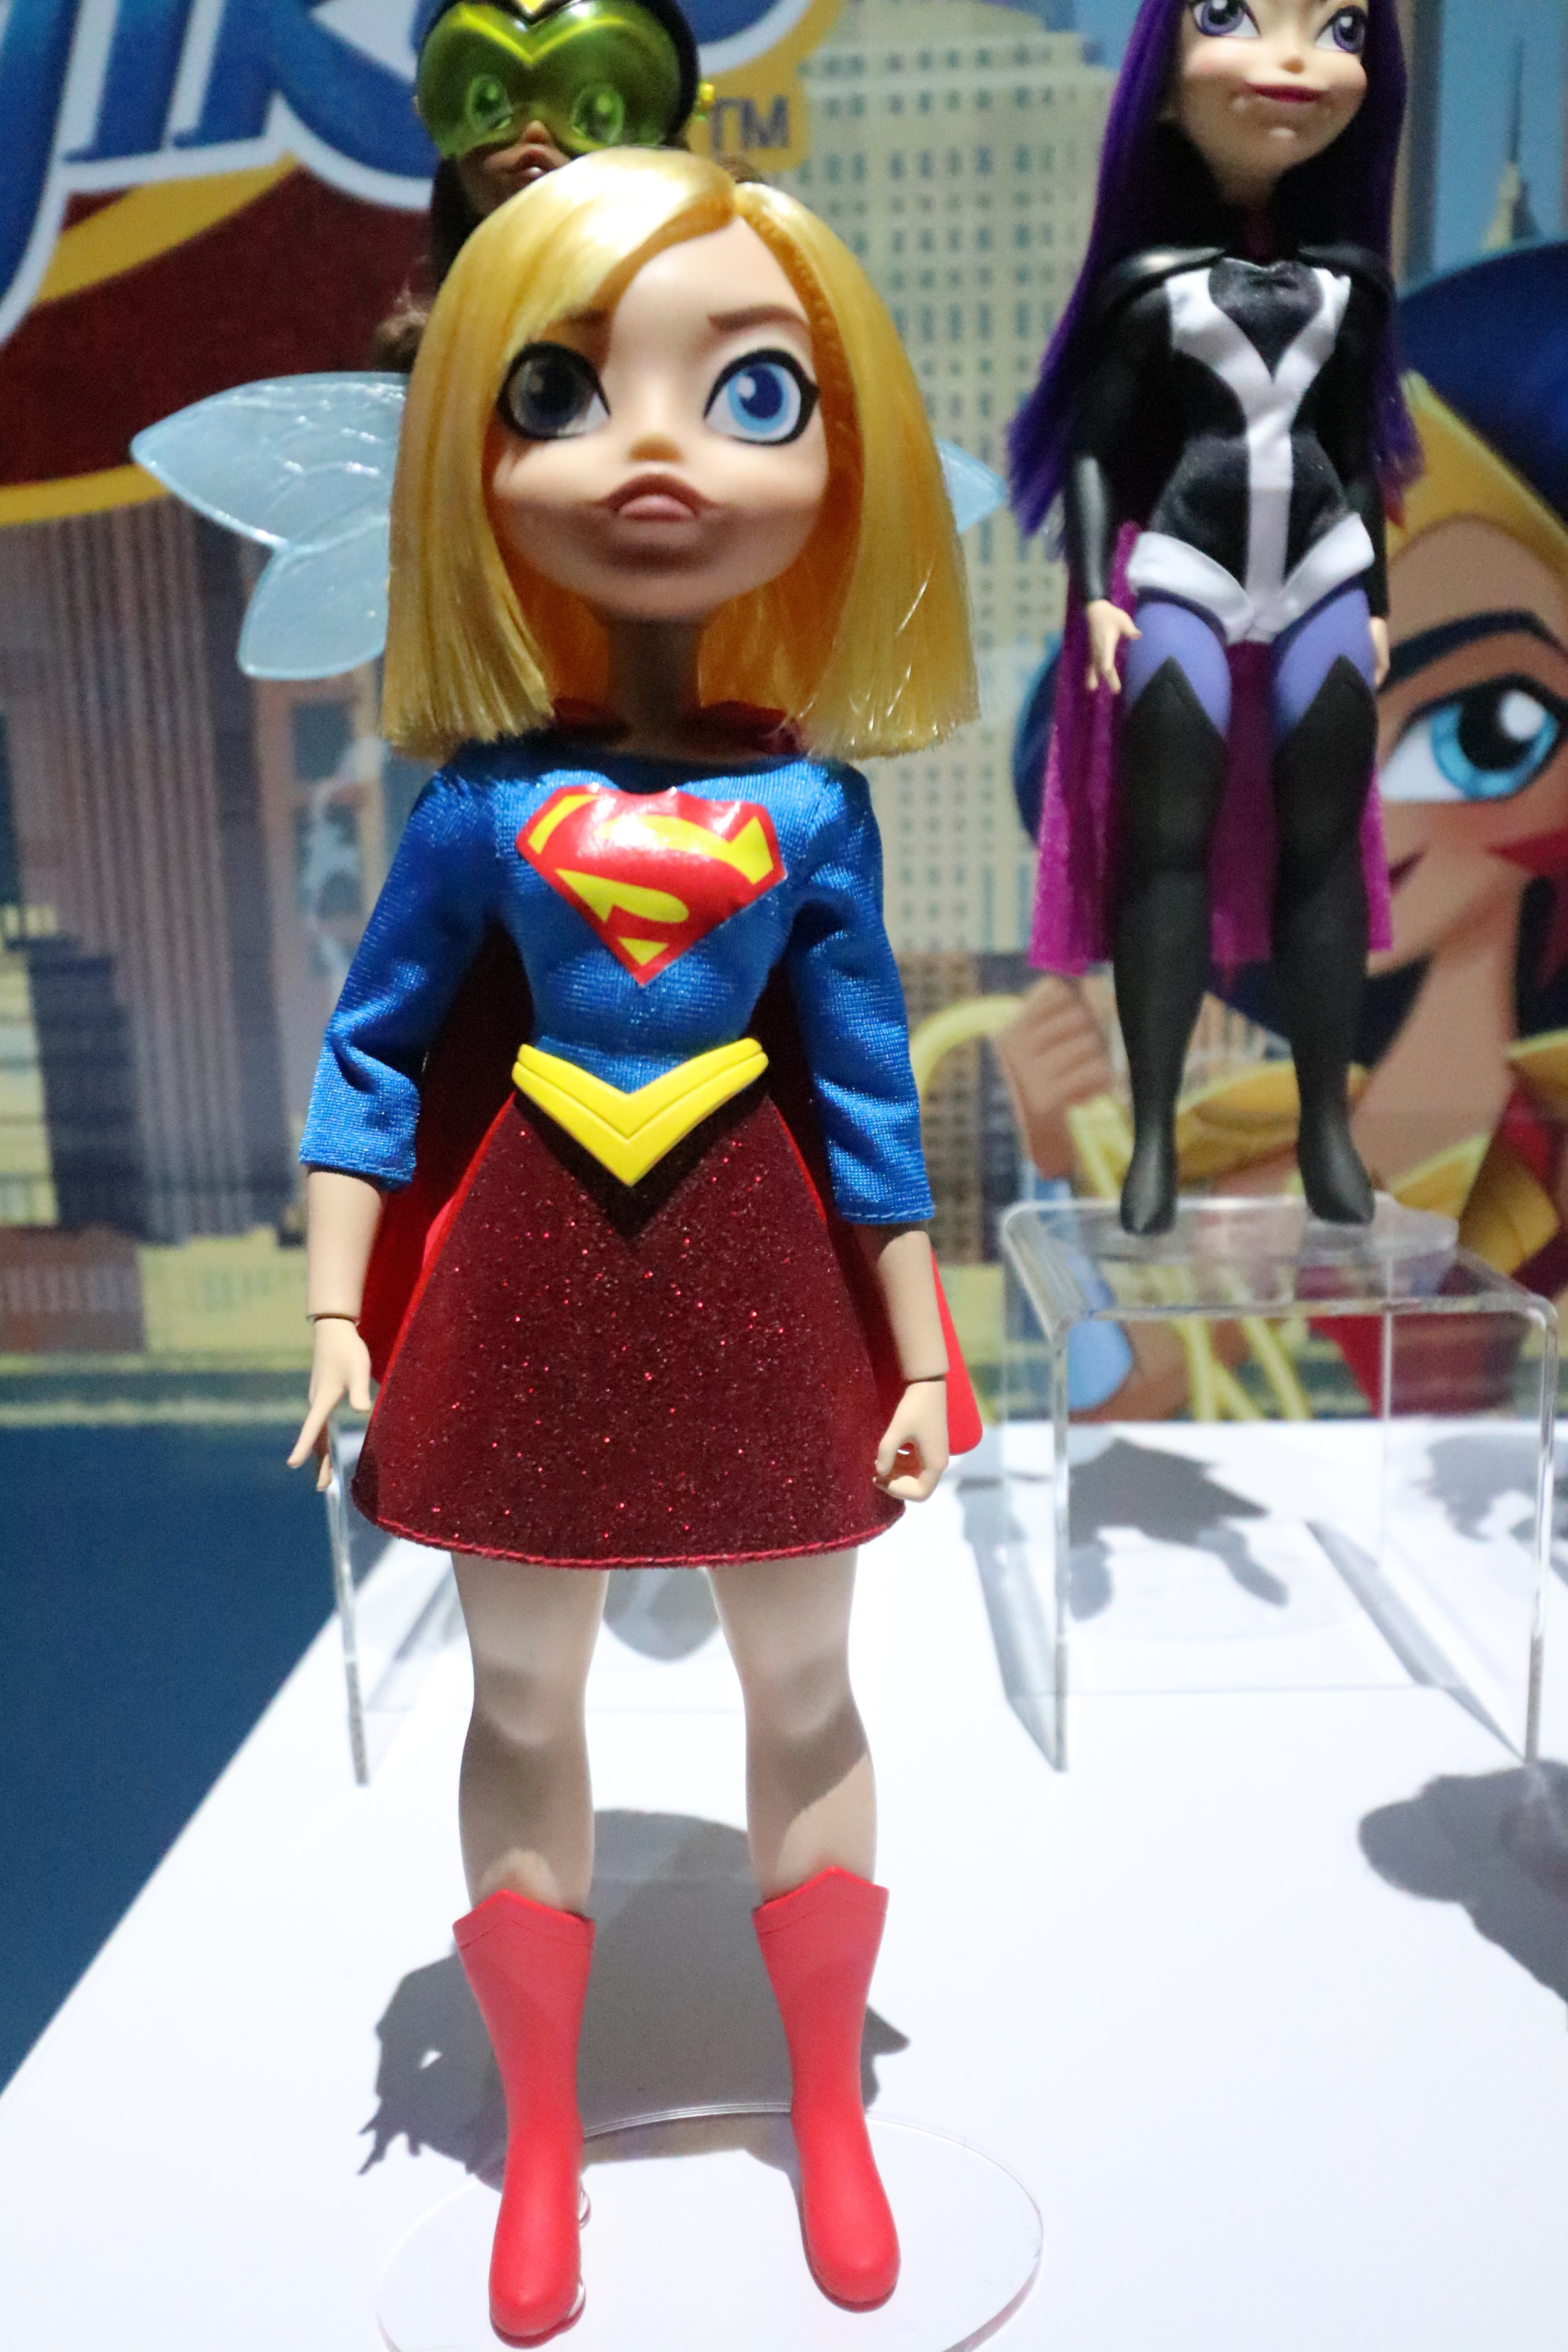 dc superhero girls 2019 doll